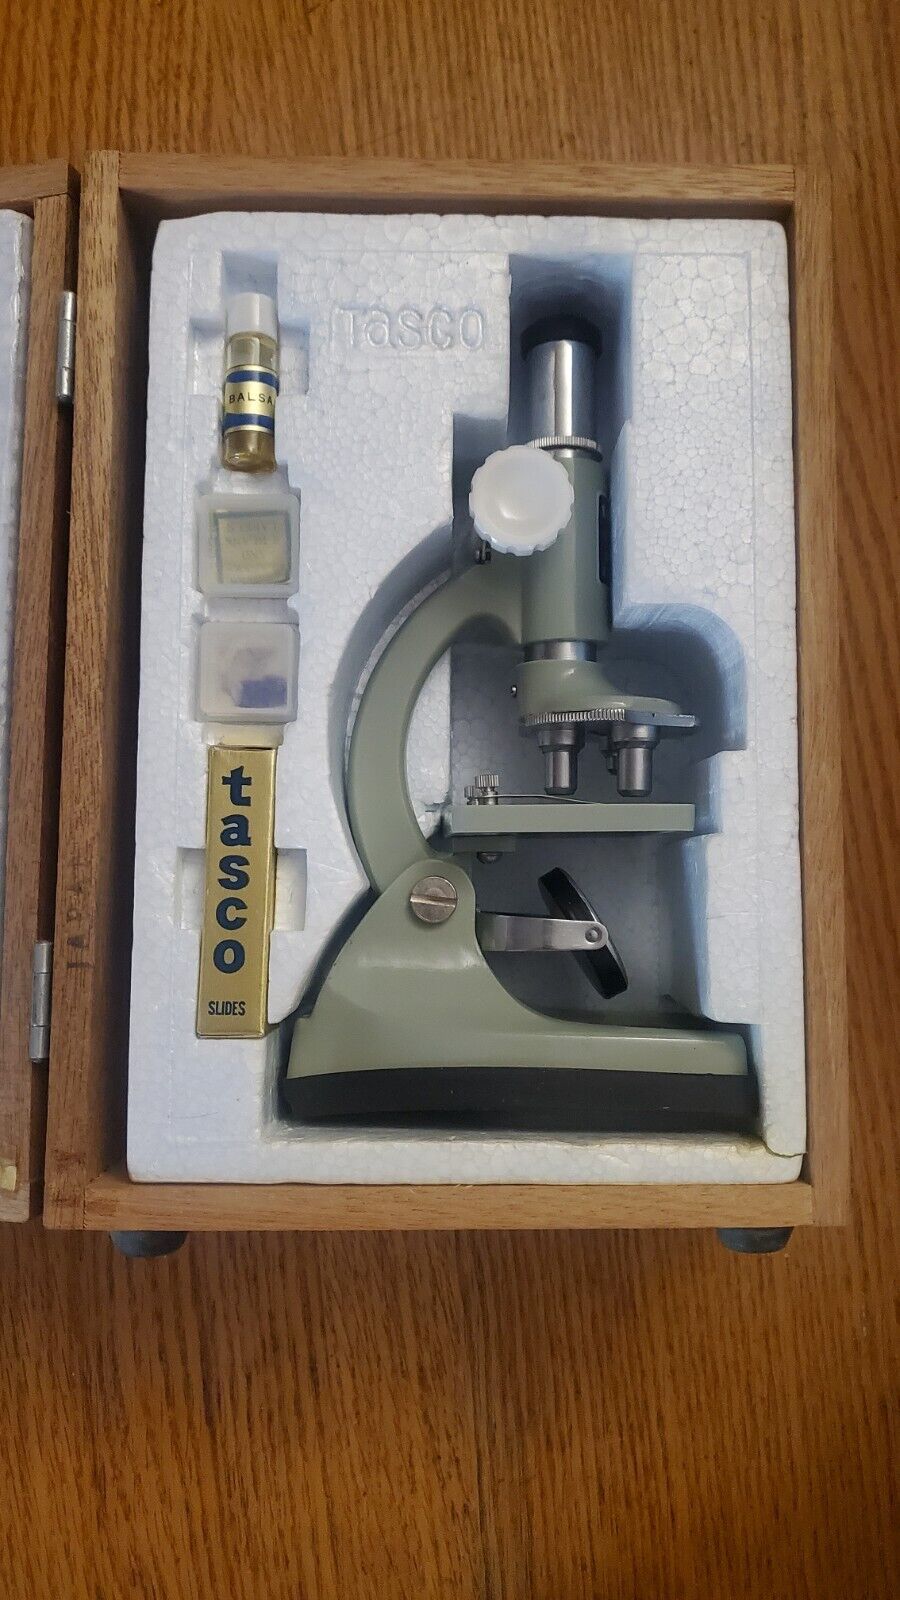 Tasco Deluxe Microscope Vintage With Wooden Box Circa 1966